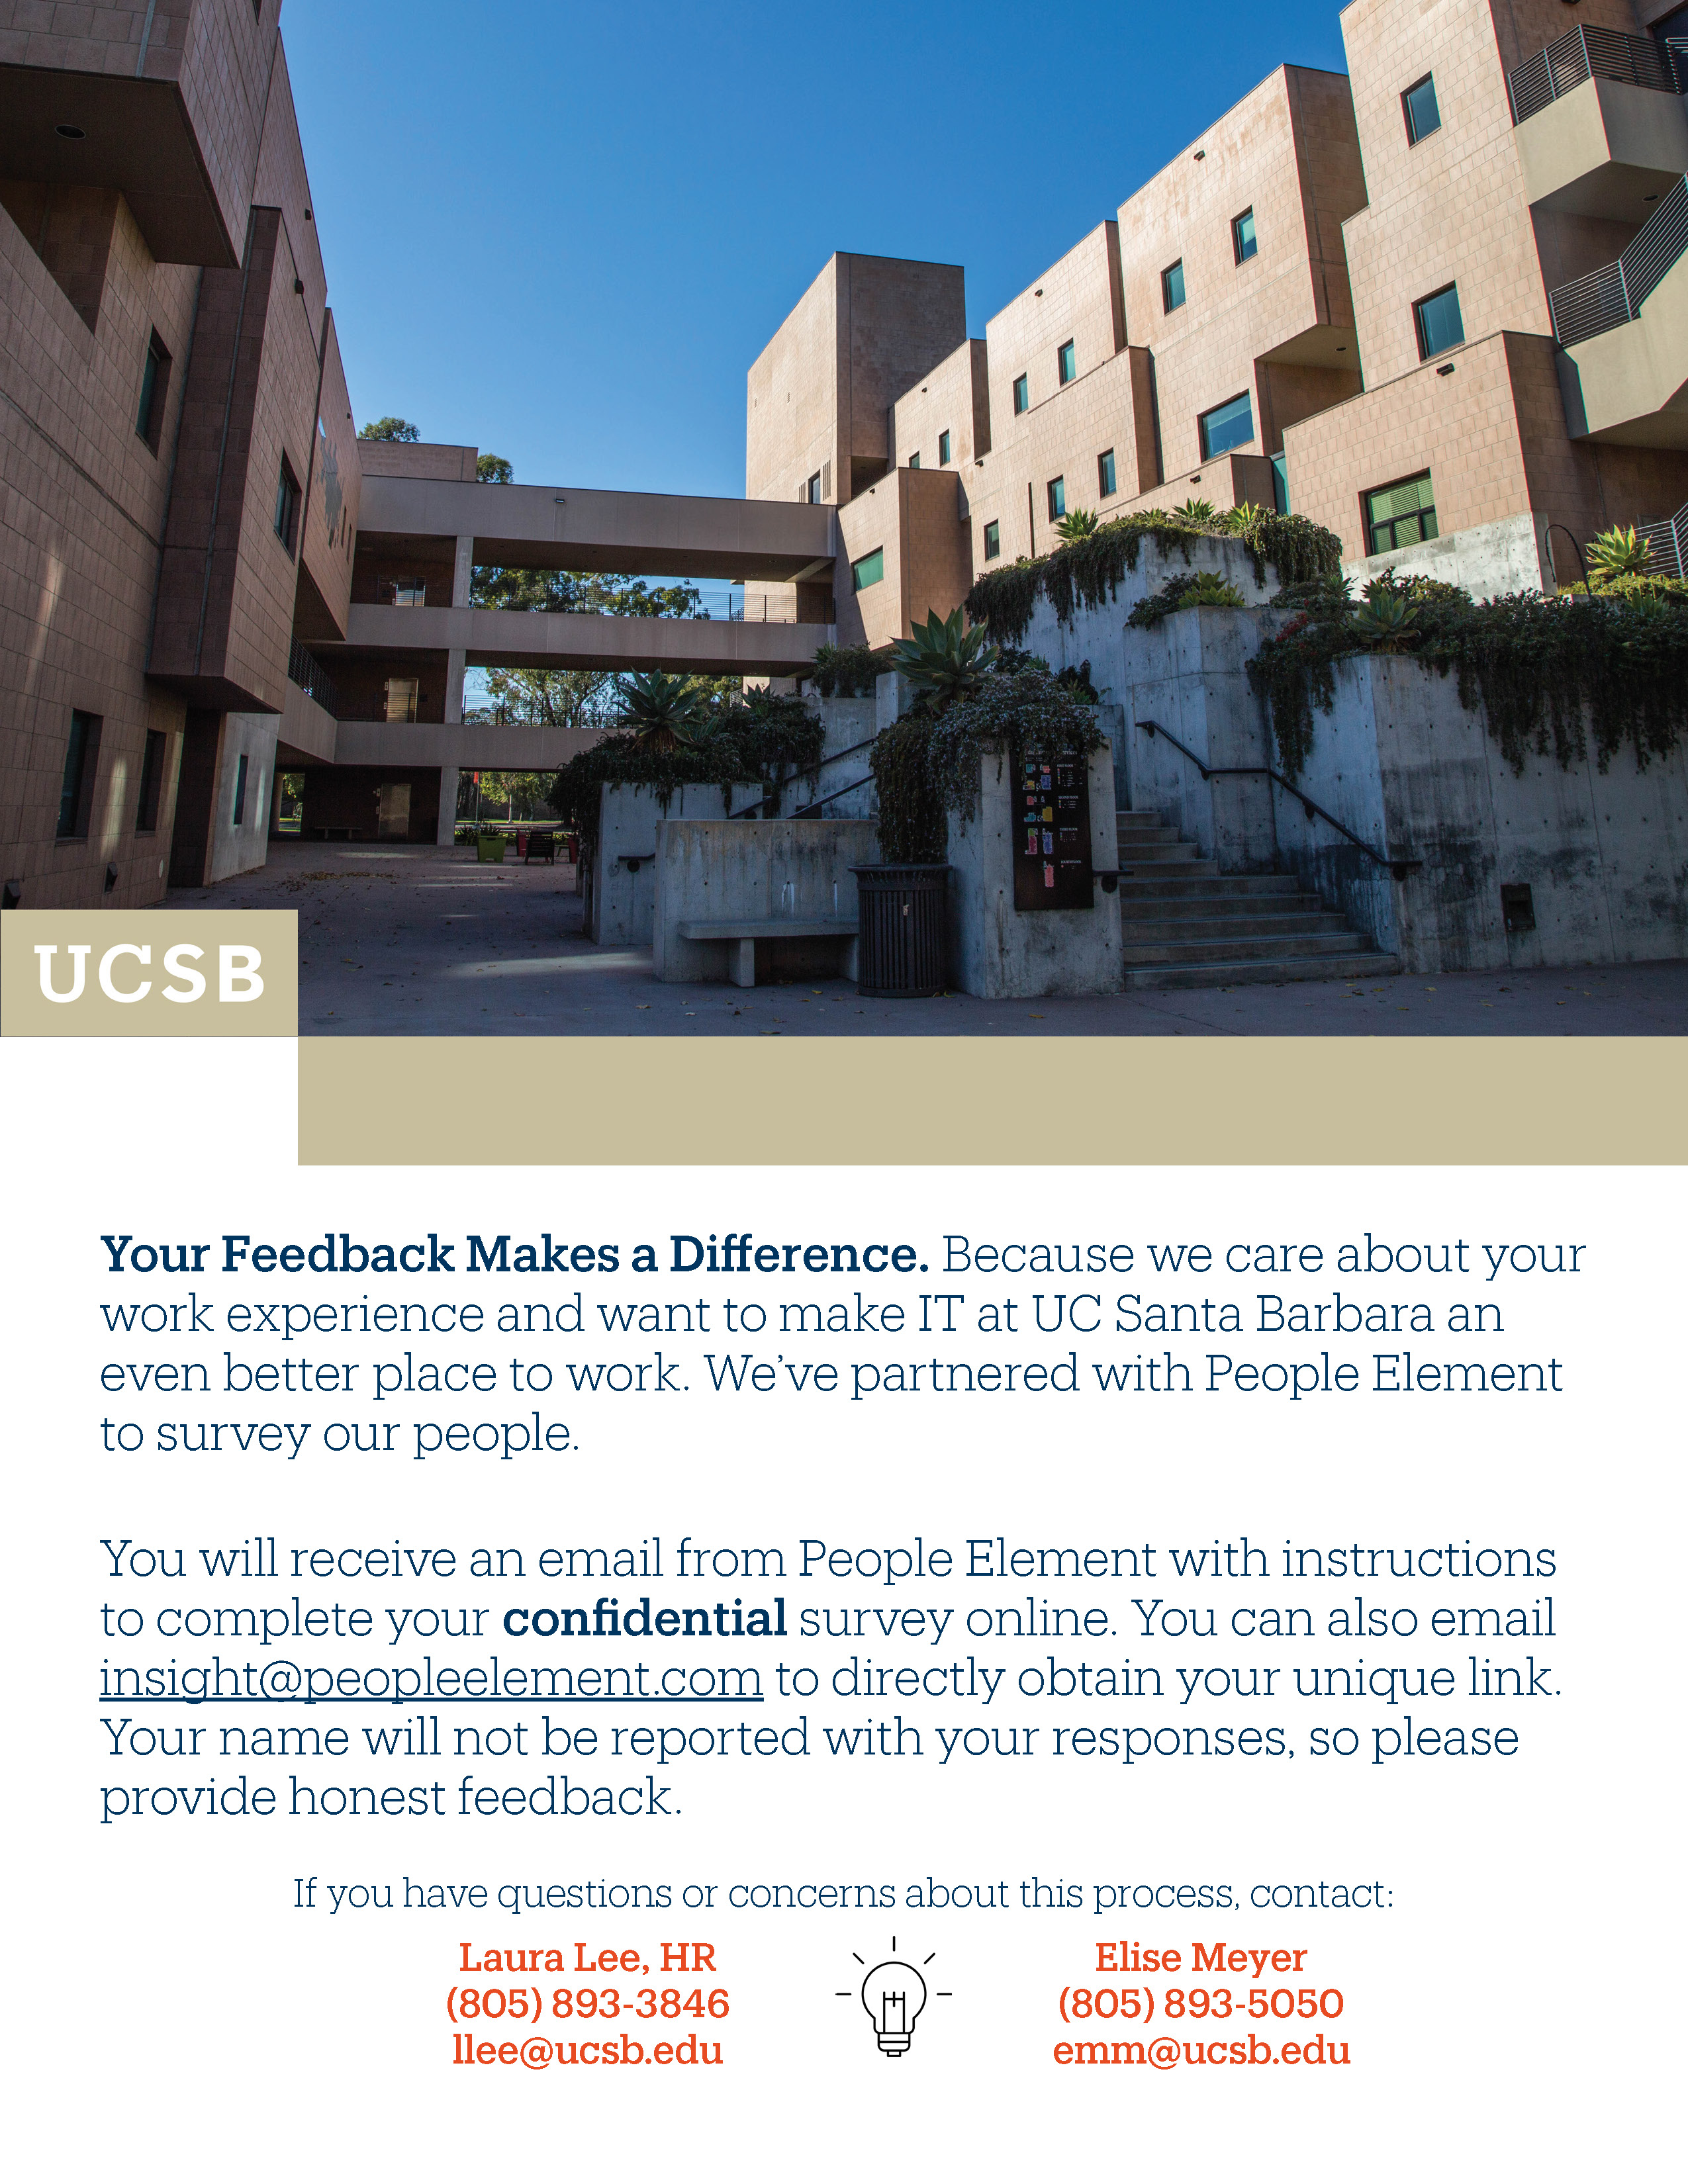 UCSB IT employee engagement survey flyer